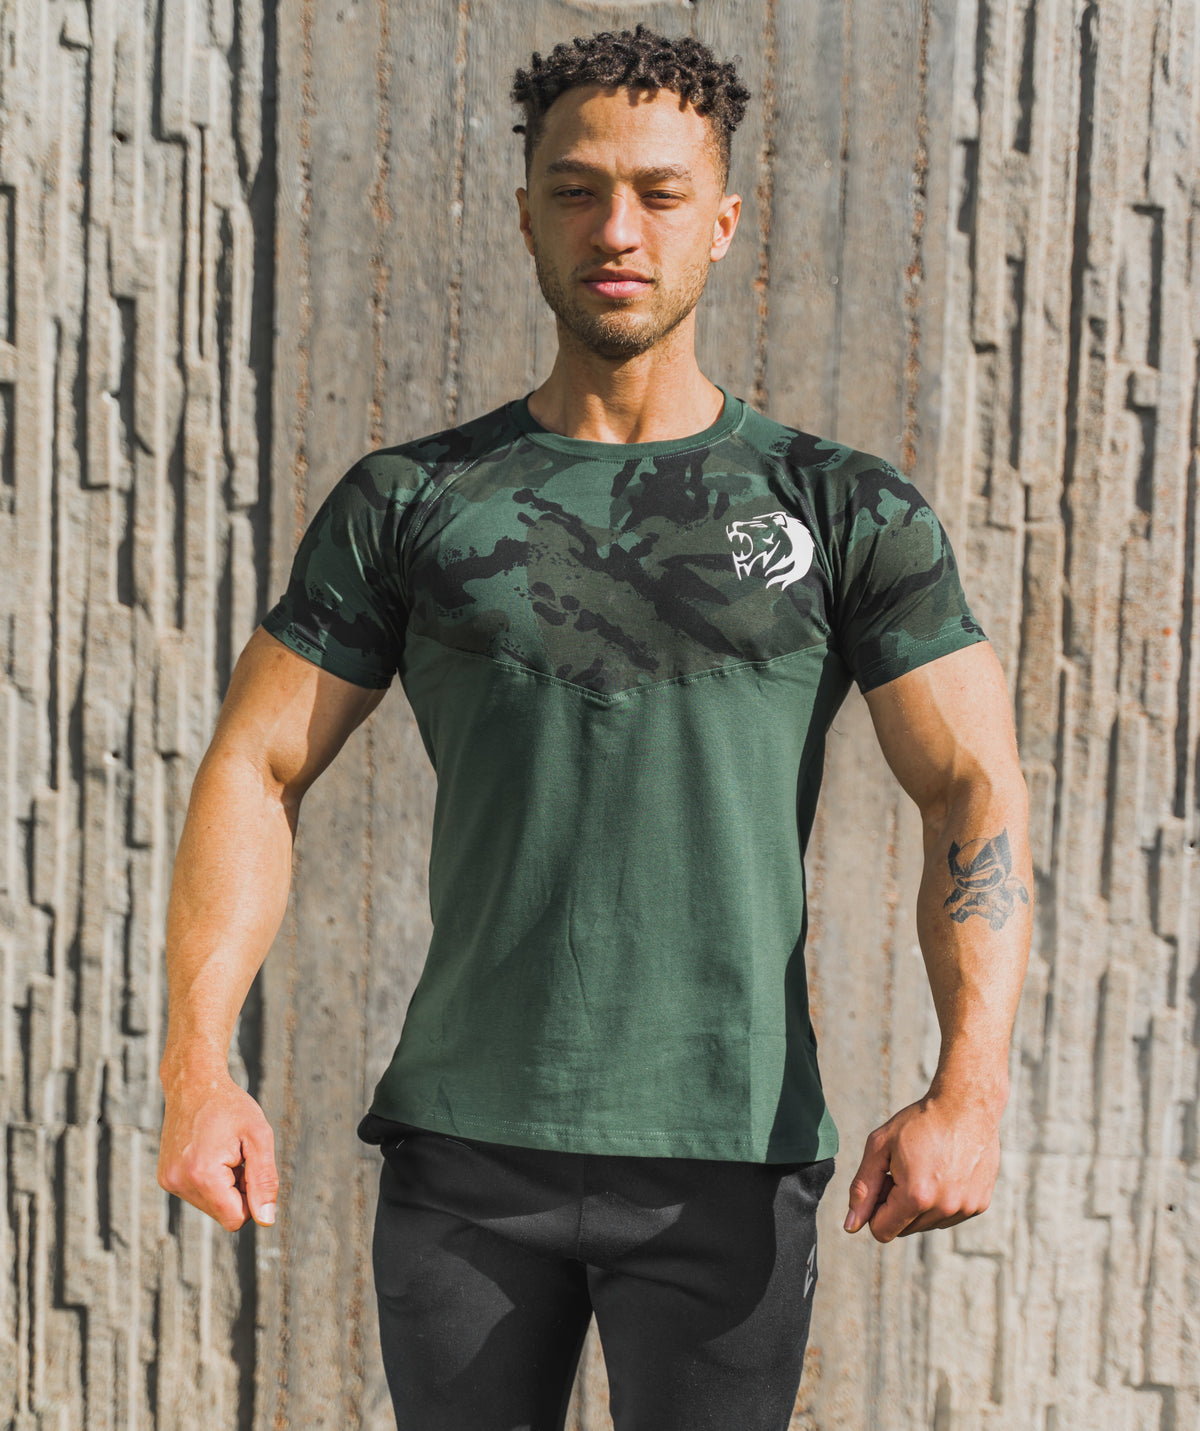 FATALITY Performance Shirt | Military Camo